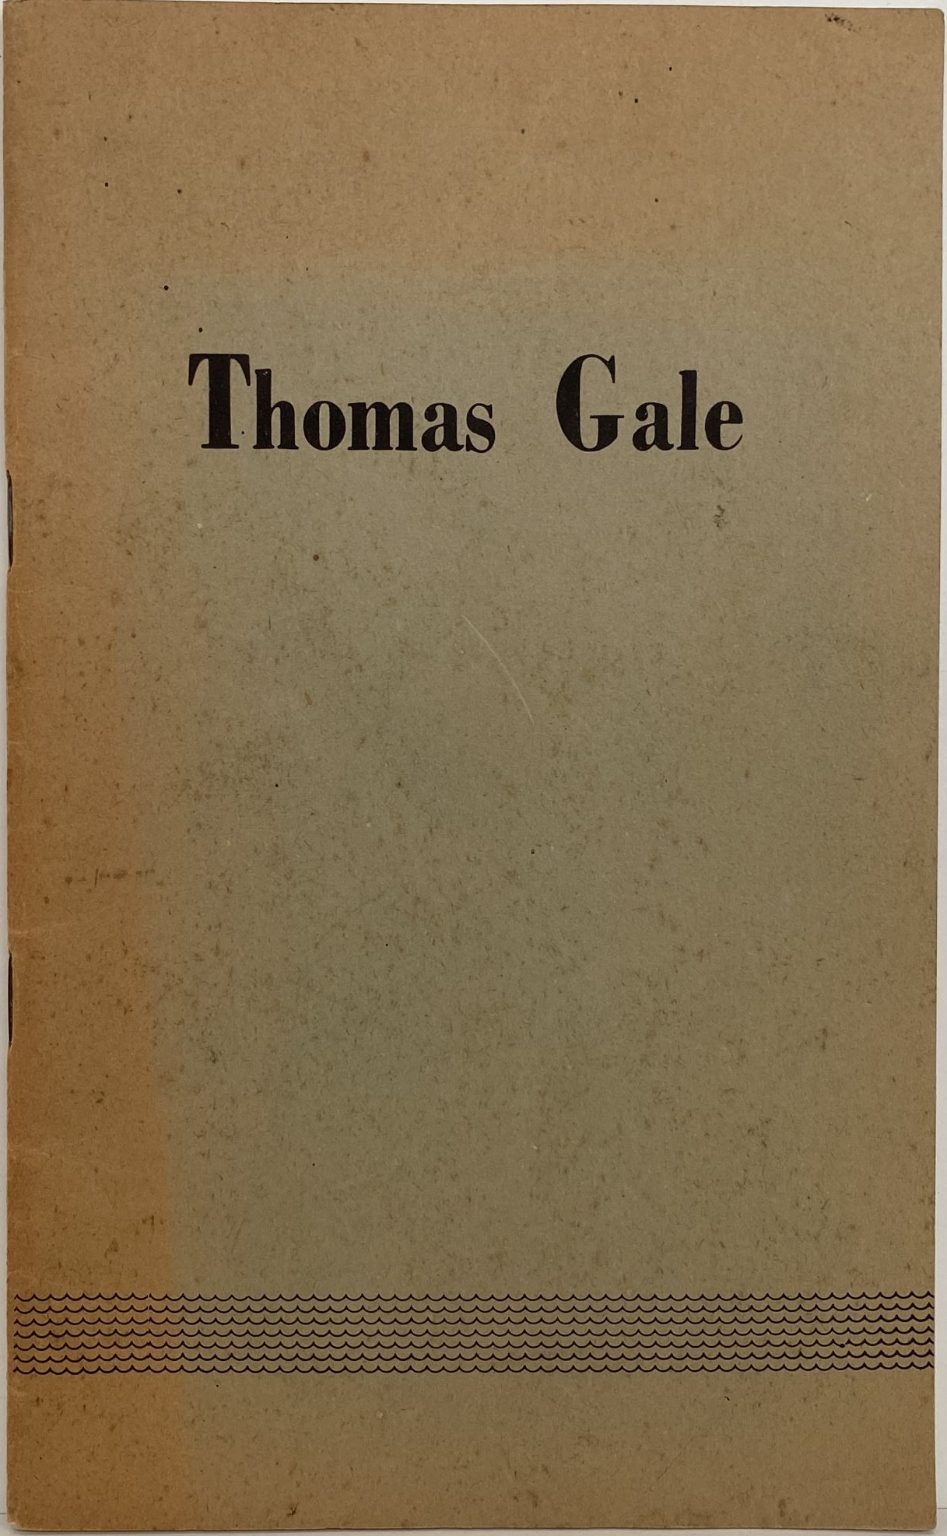 Thomas (Tom) Gale biography of memories